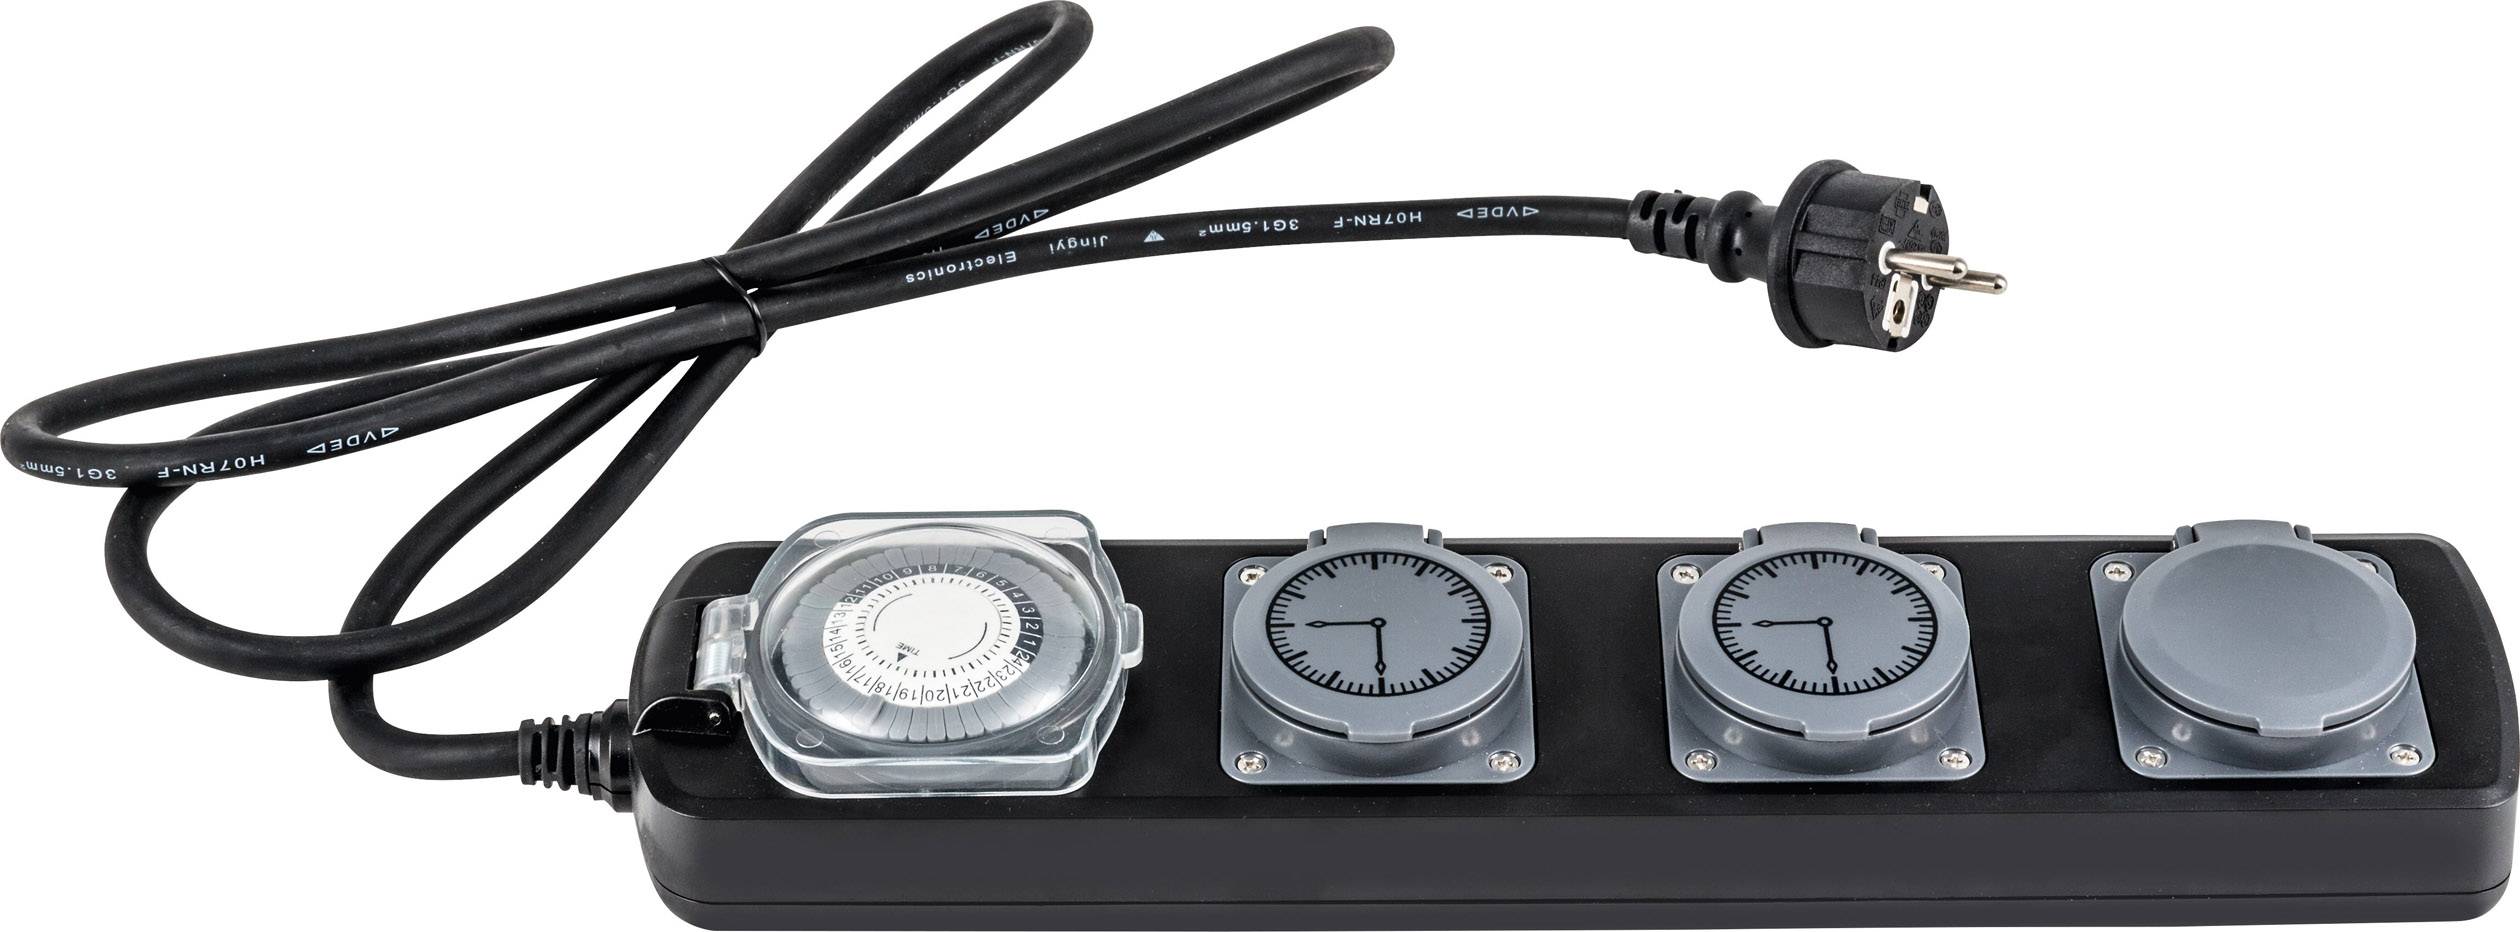 Heitronic 45074 Power strip (+ timer) 3x Grey PG connector | Conrad.com